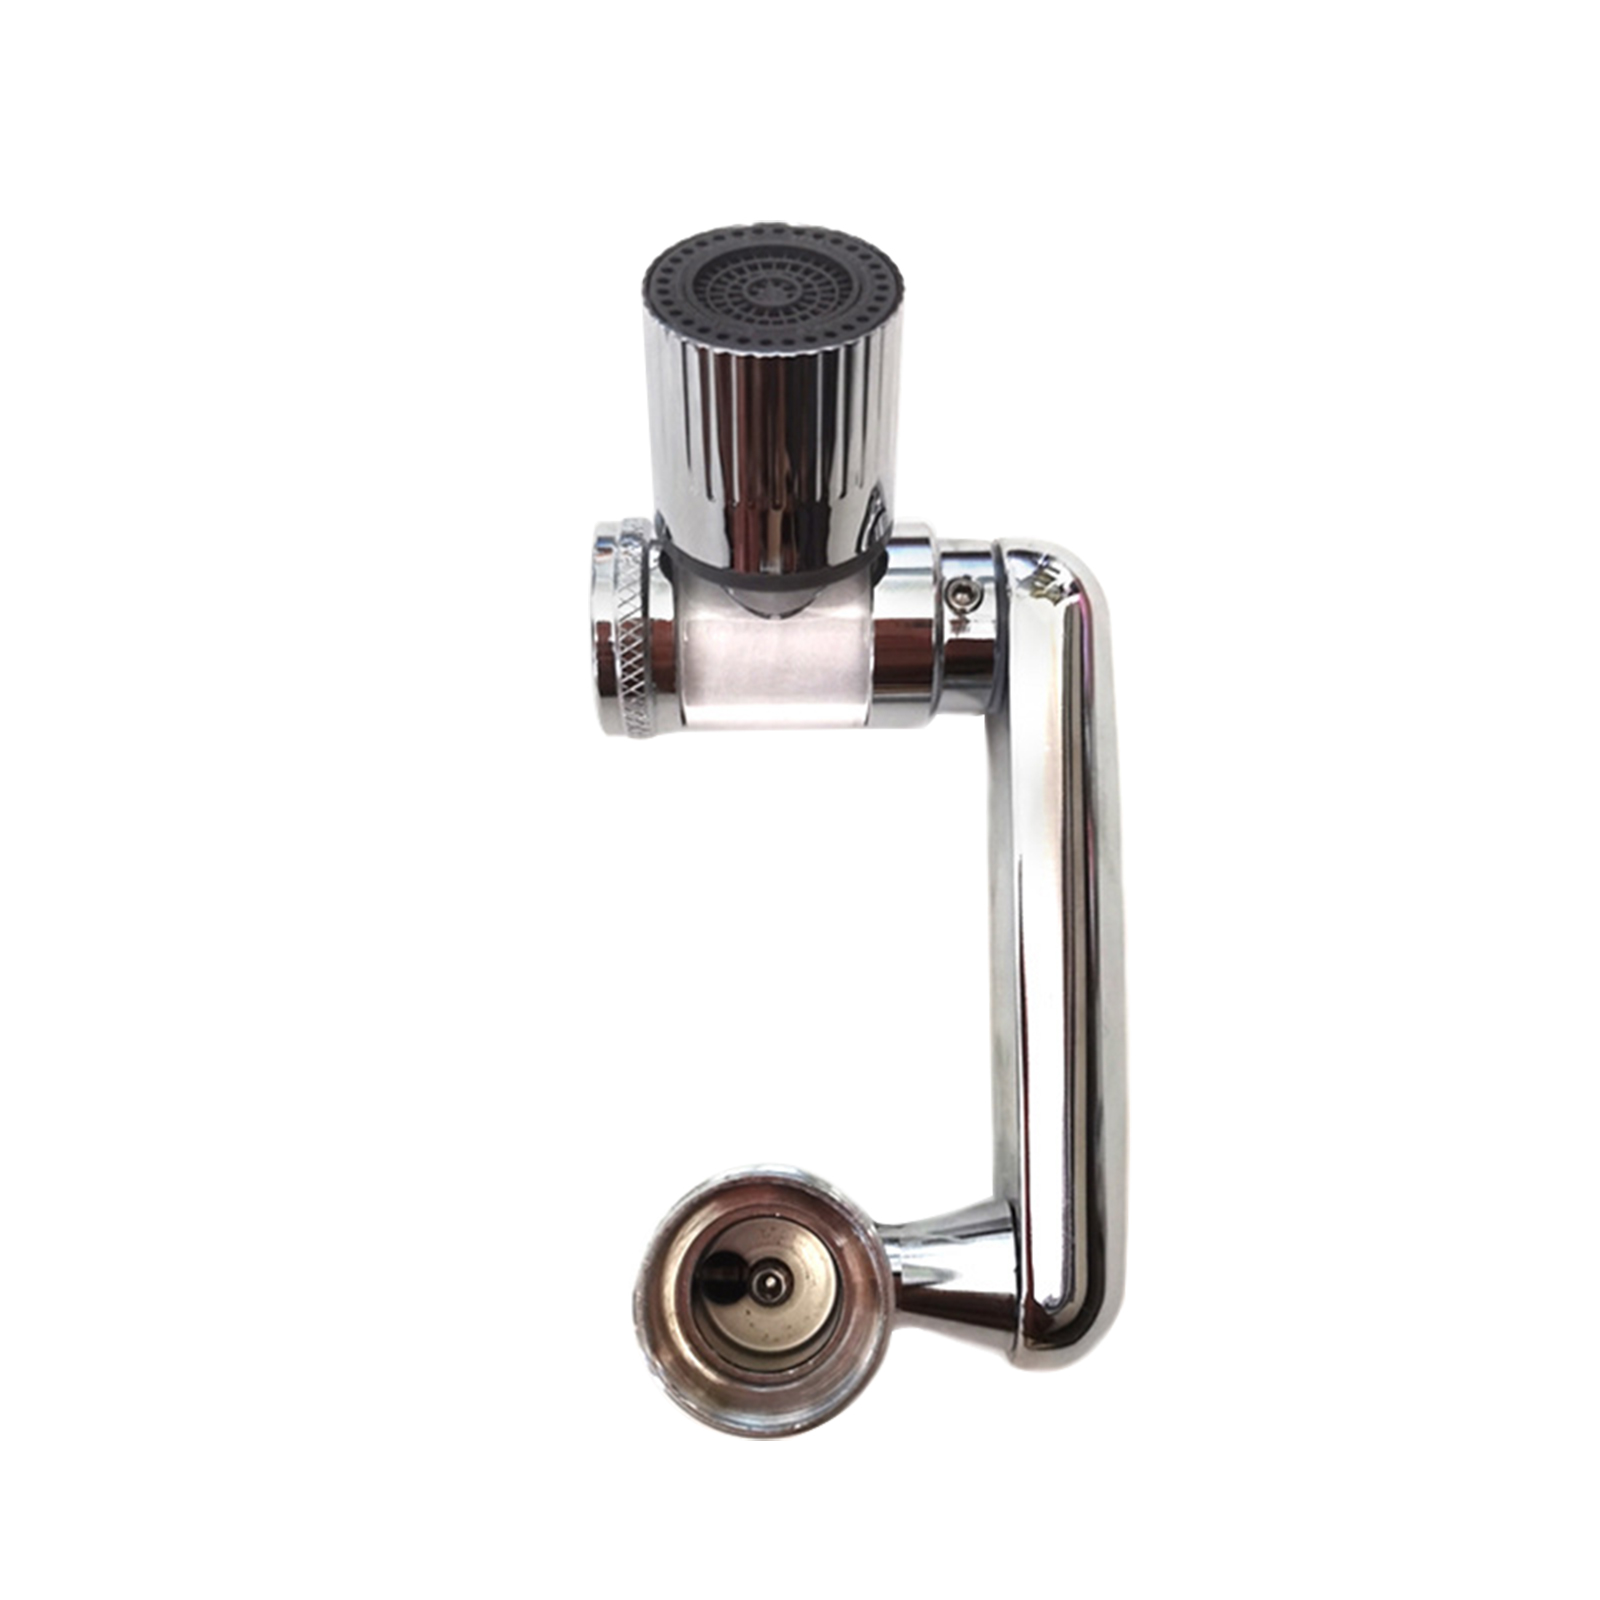 Kitchen Sink Faucet Extender 2 Water Flow Mode 3D Free Rotation Faucet Aerator Universal Swivel Robotic Arm